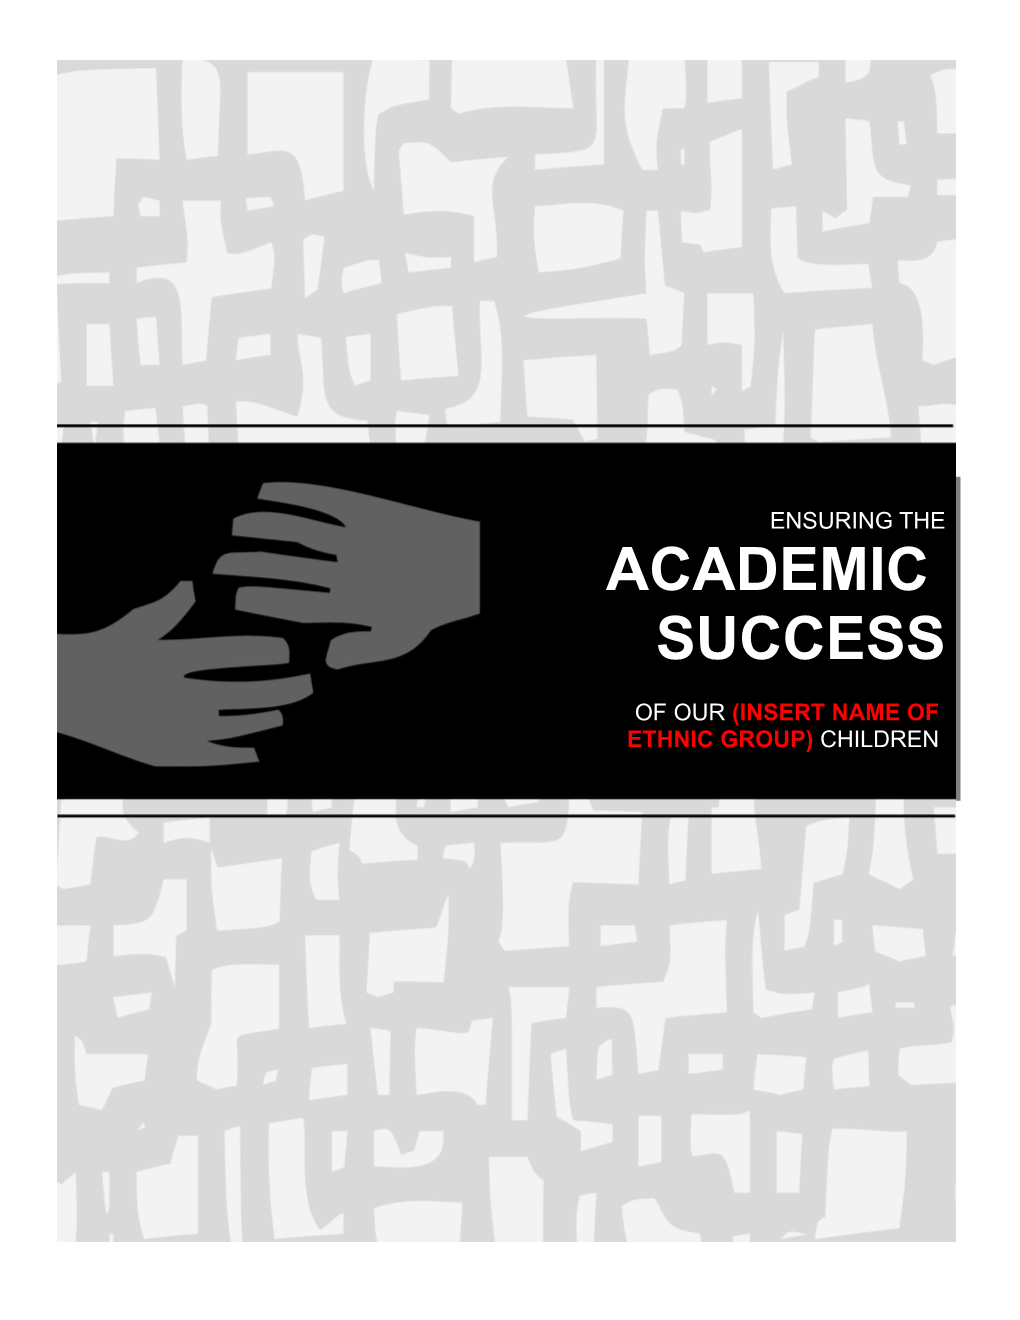 Ensuring the Academic Success